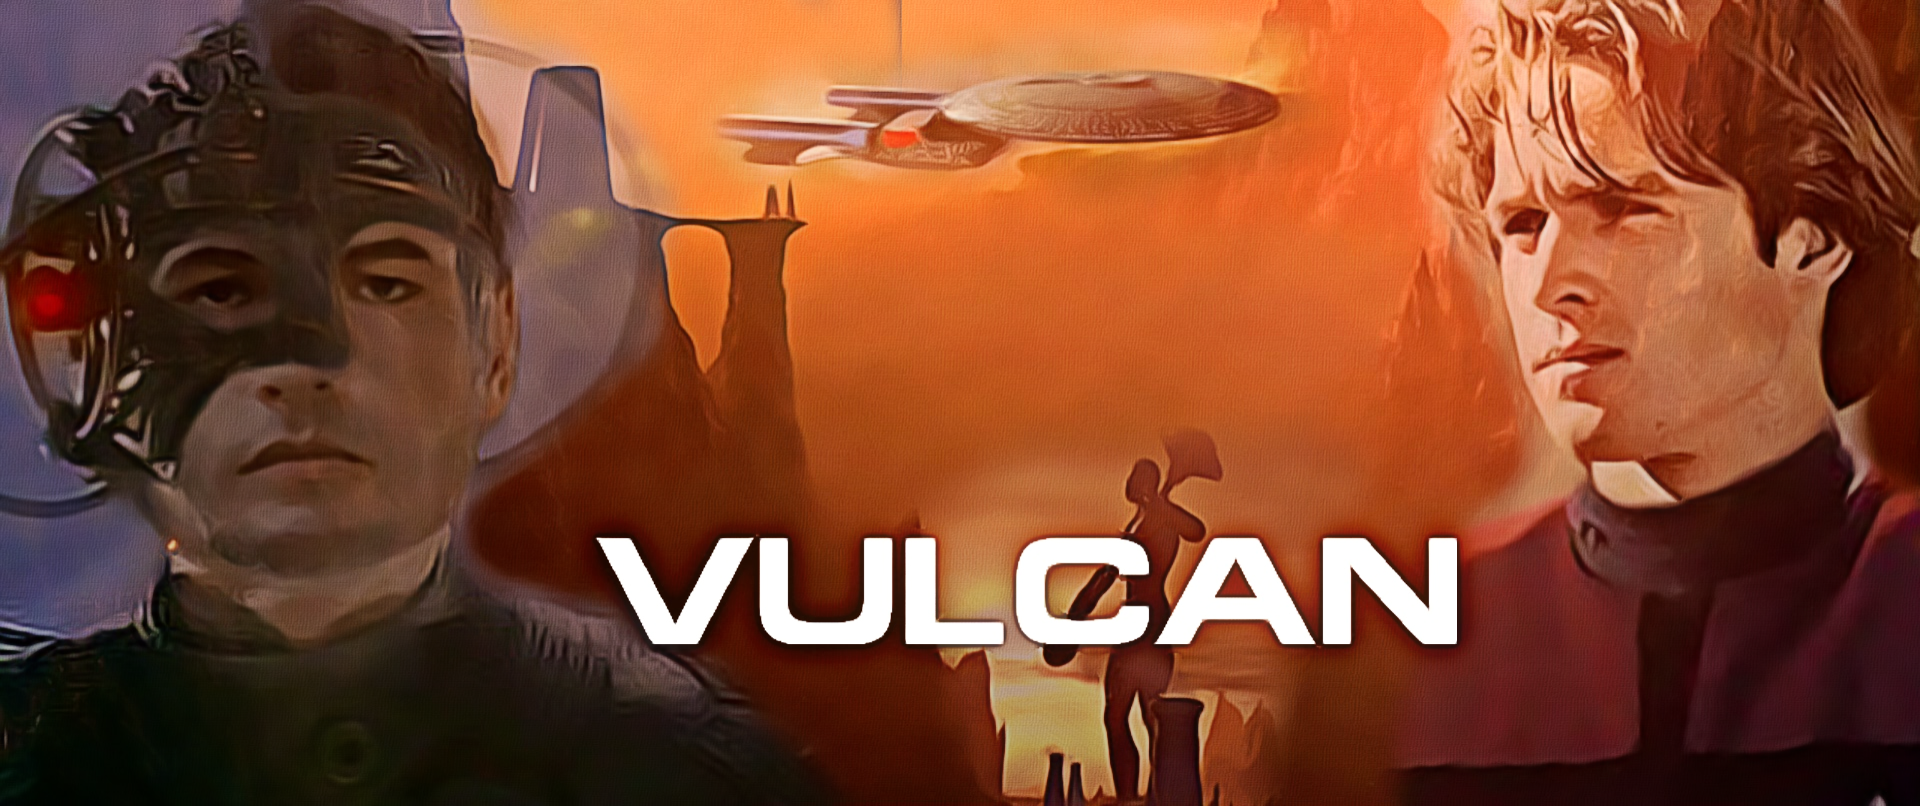 Vulcan by Scribe